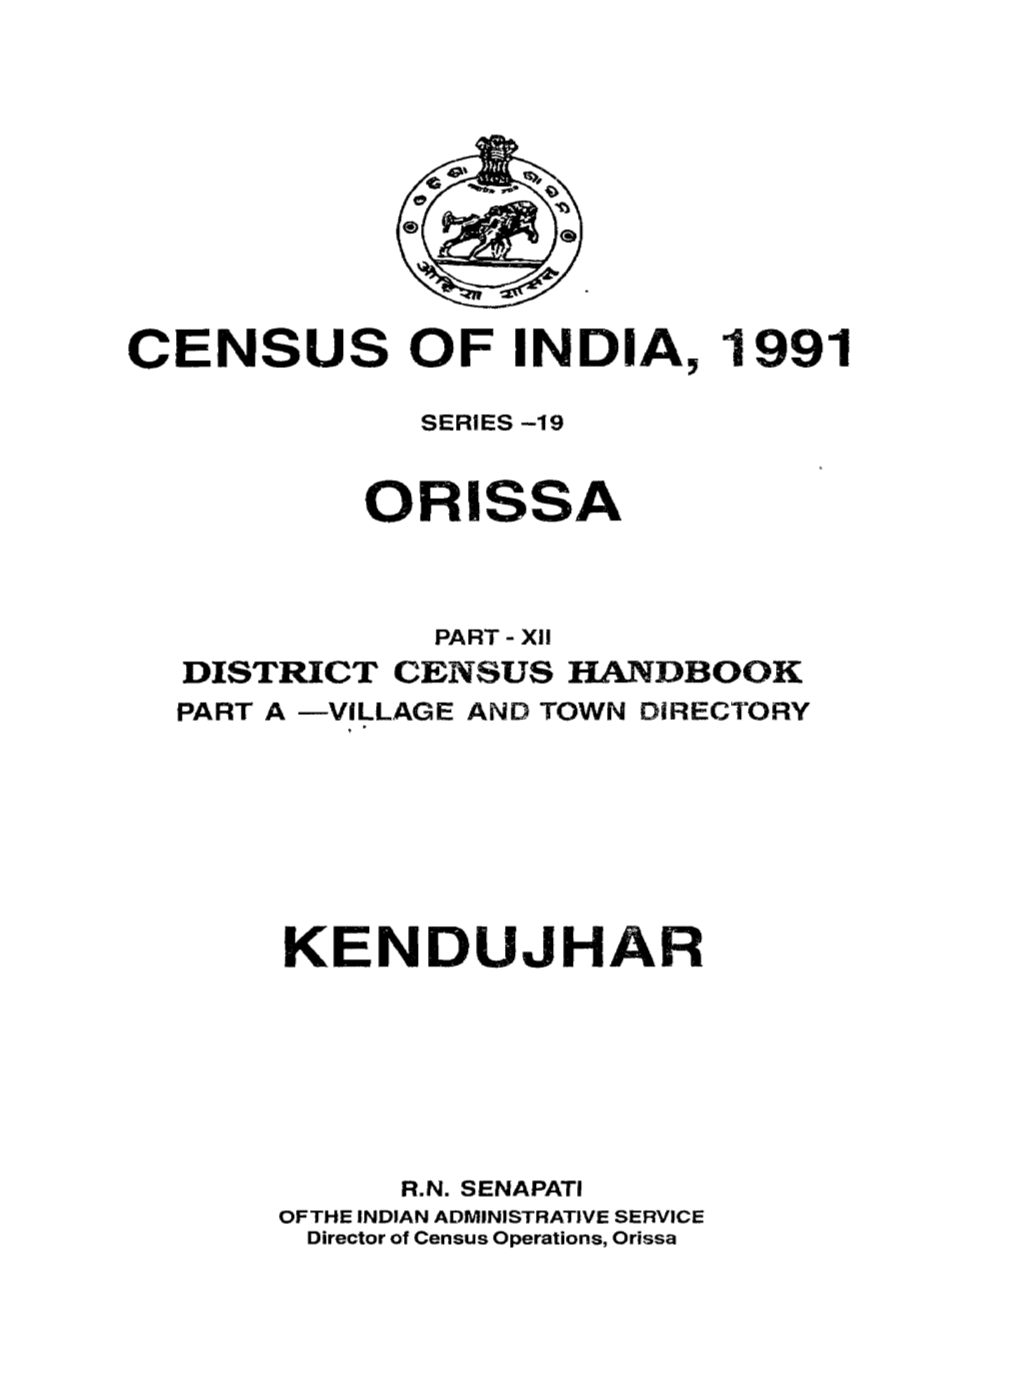 Village and Town Directory, Kendujhar, Part-A, Series-19, Orissa